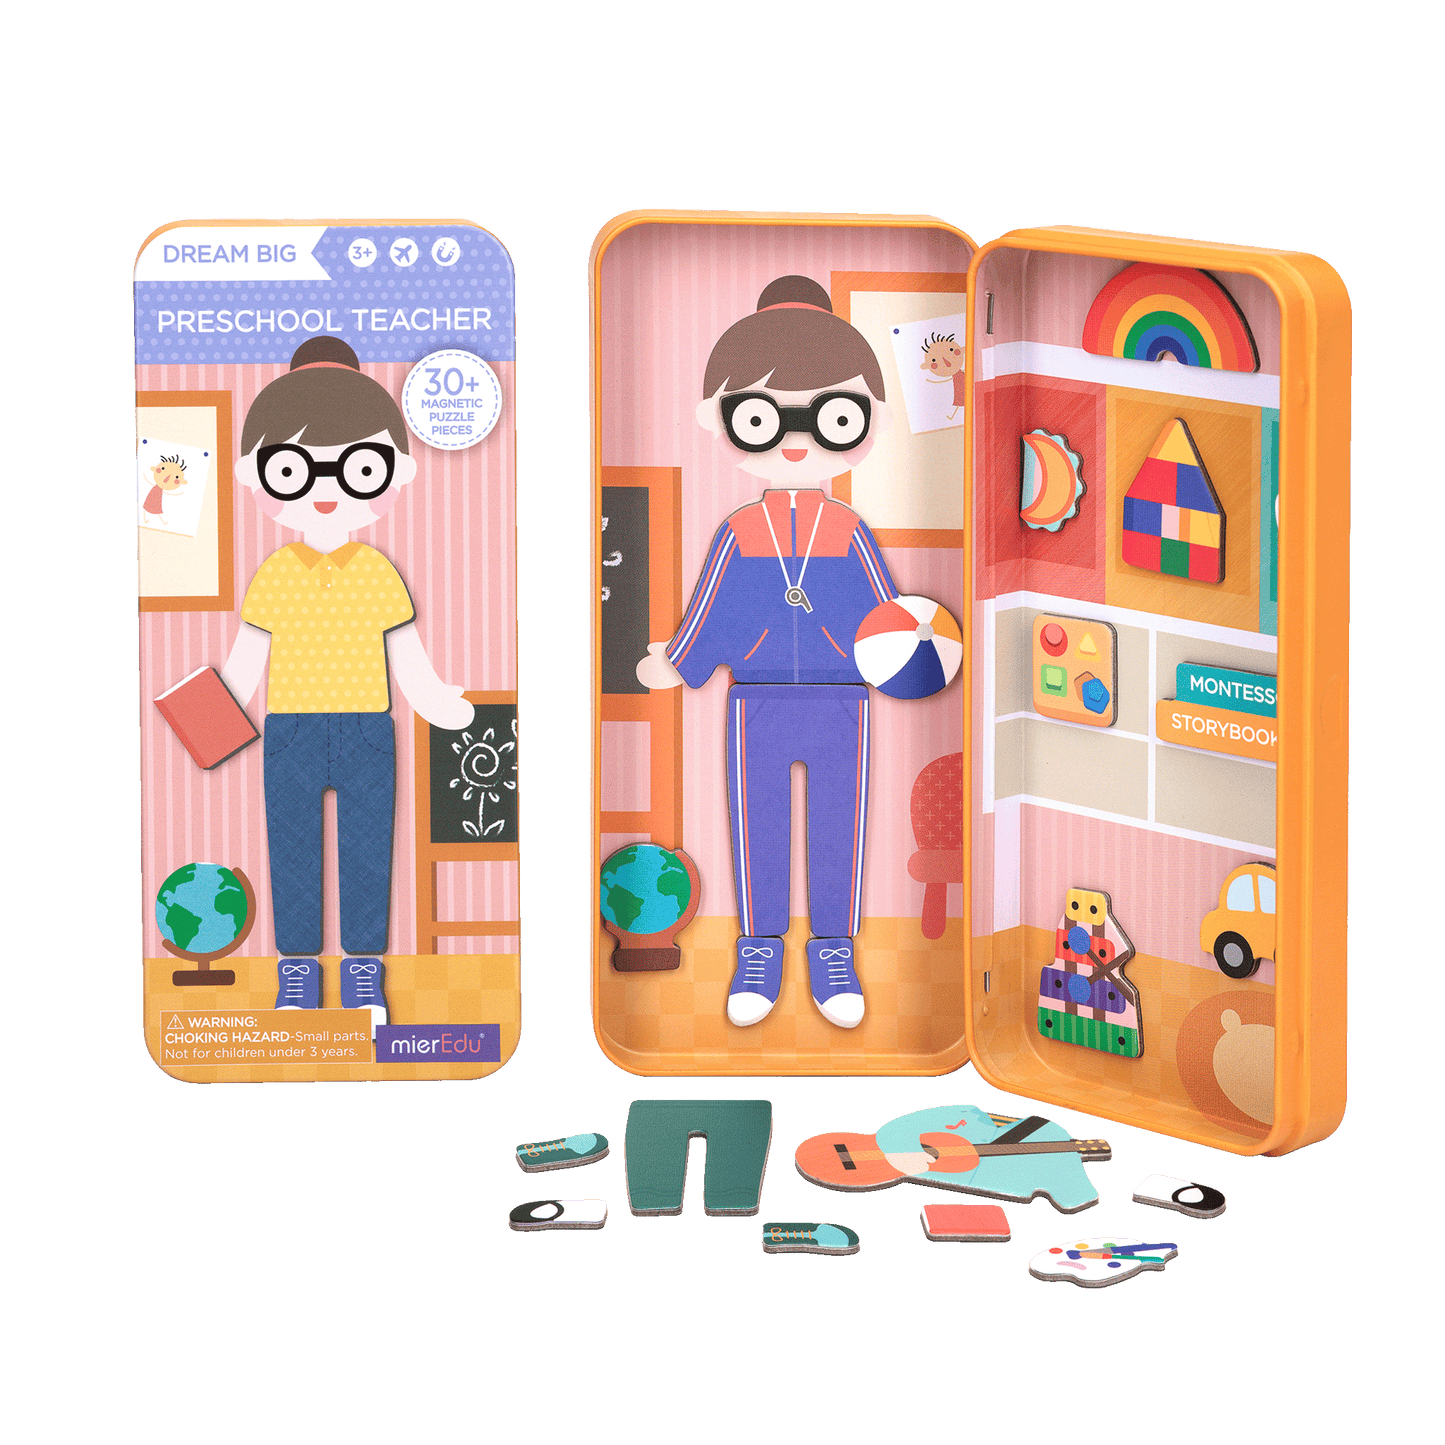 MierEdu Dream Big Magnetic Puzzle Box- Preschool Teacher